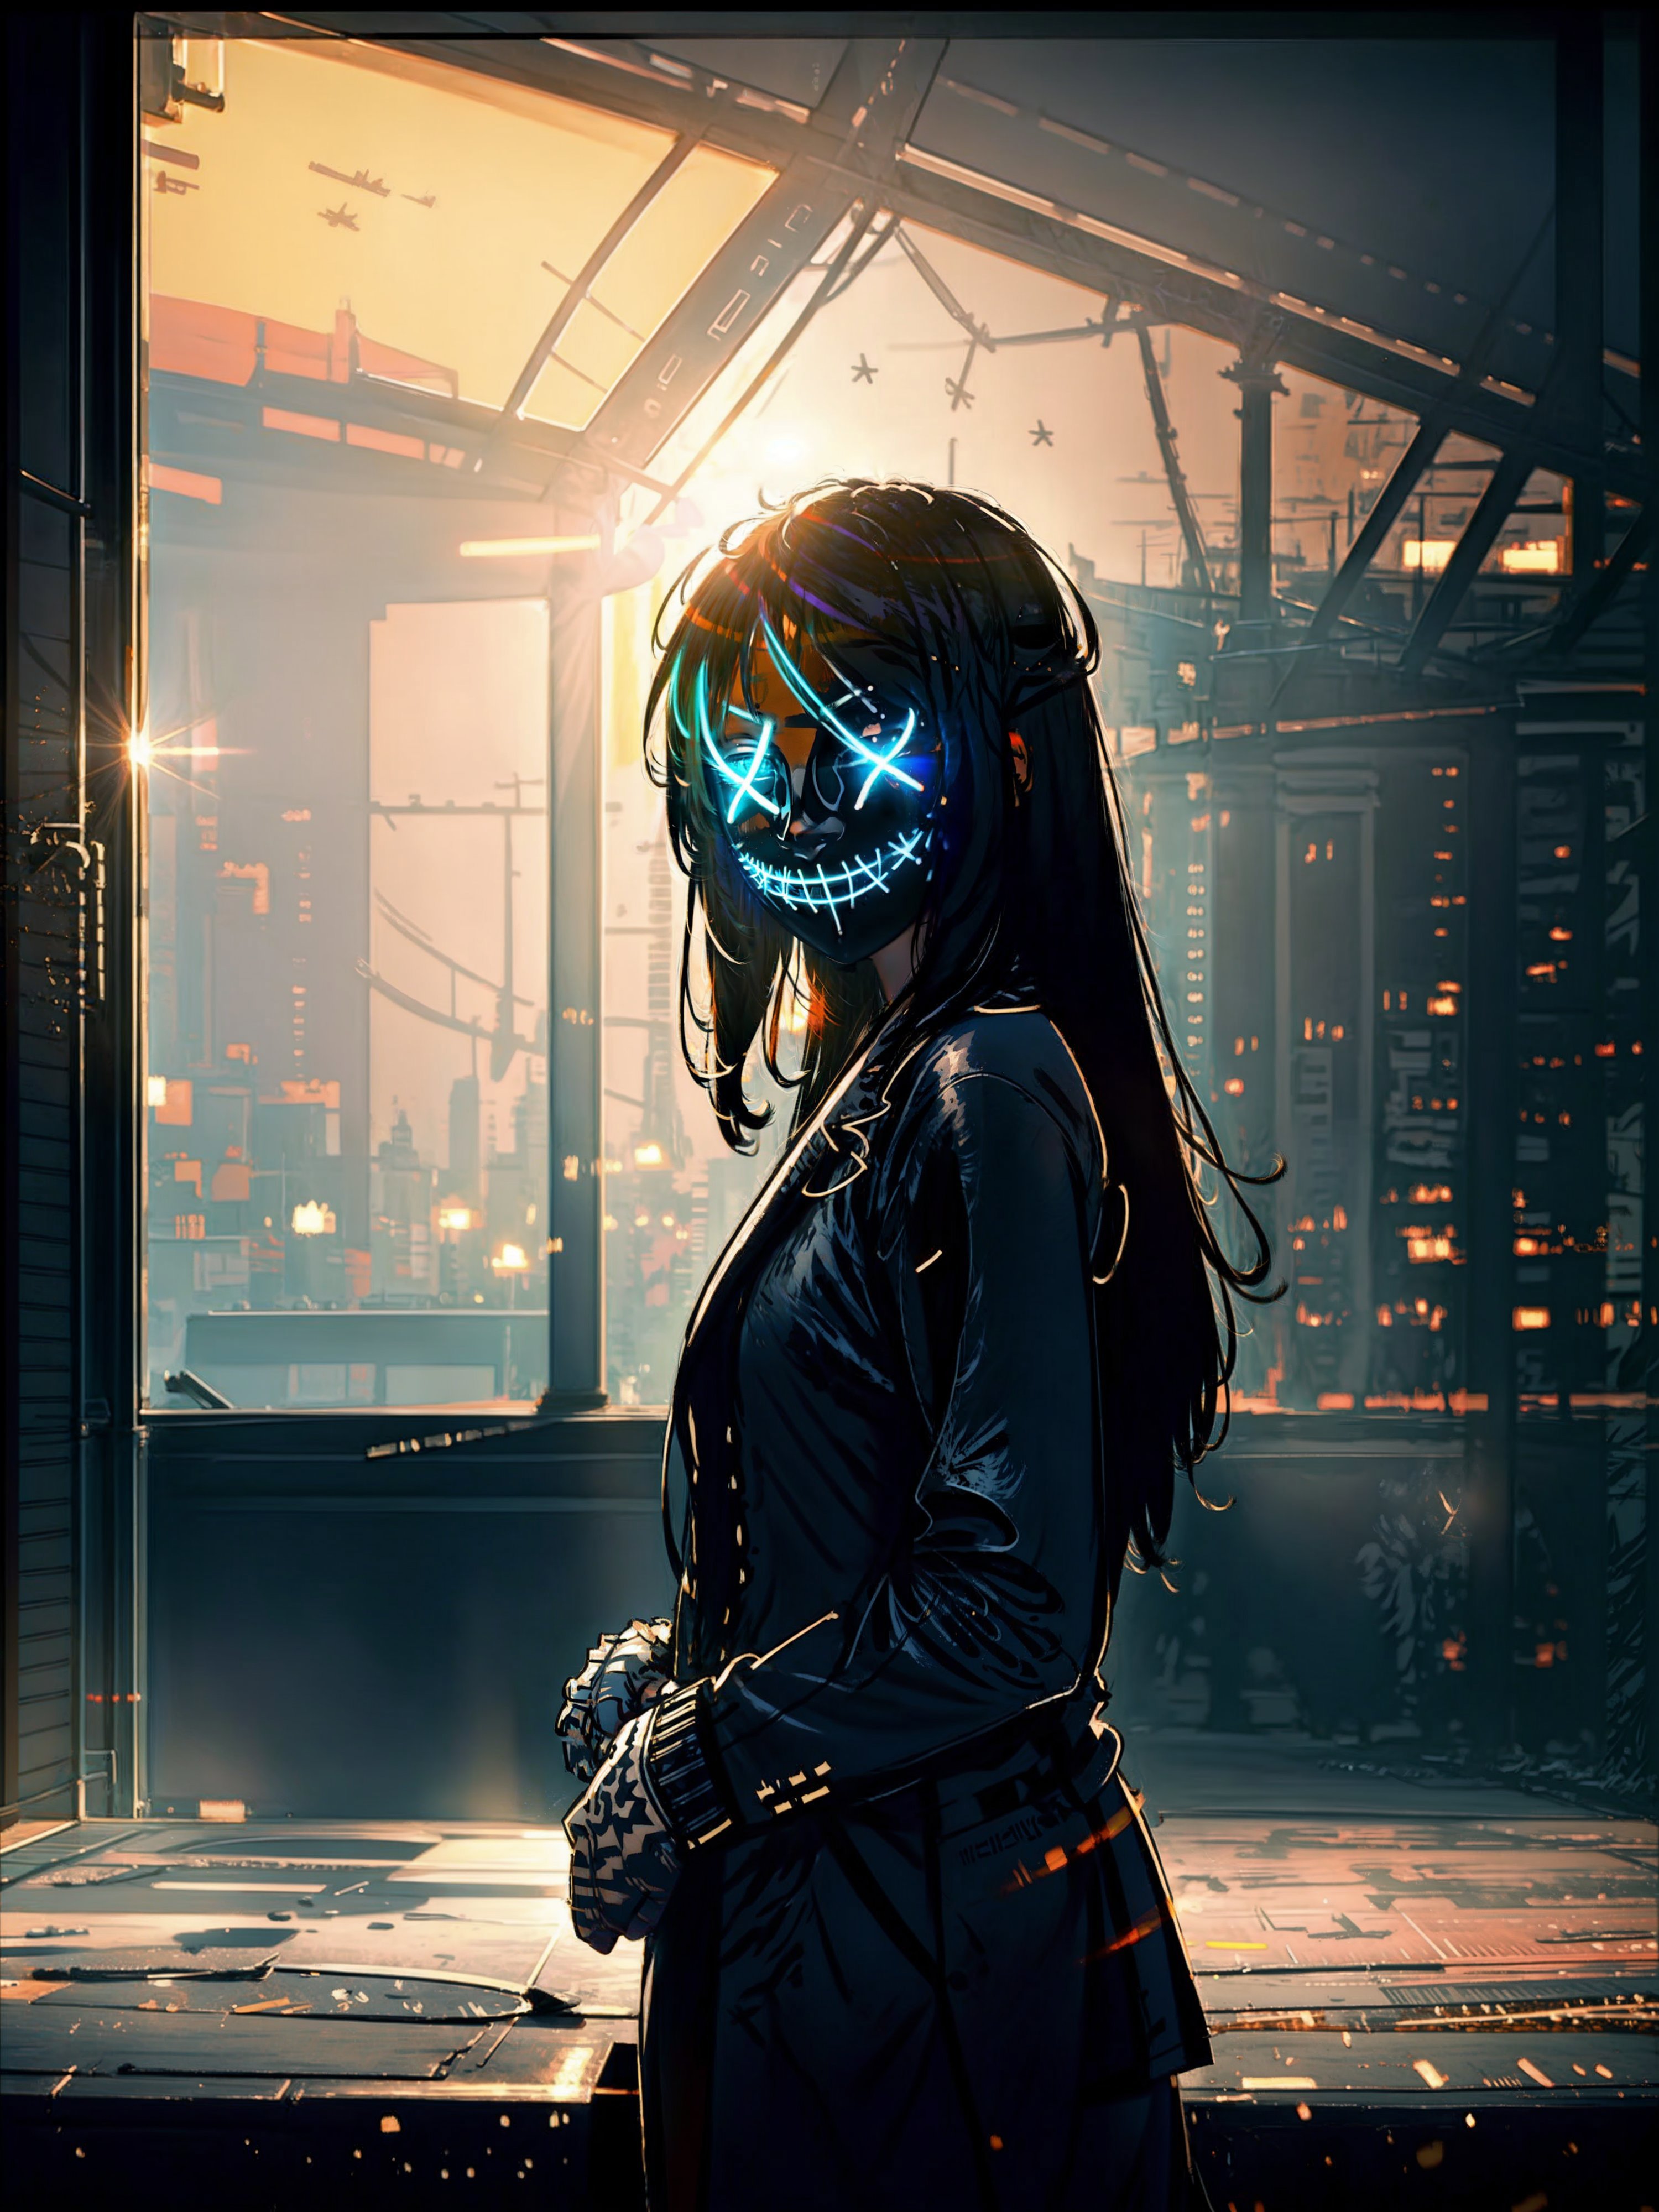 Neon Anonymous Mask | Judgment night mask image by ARTik_31